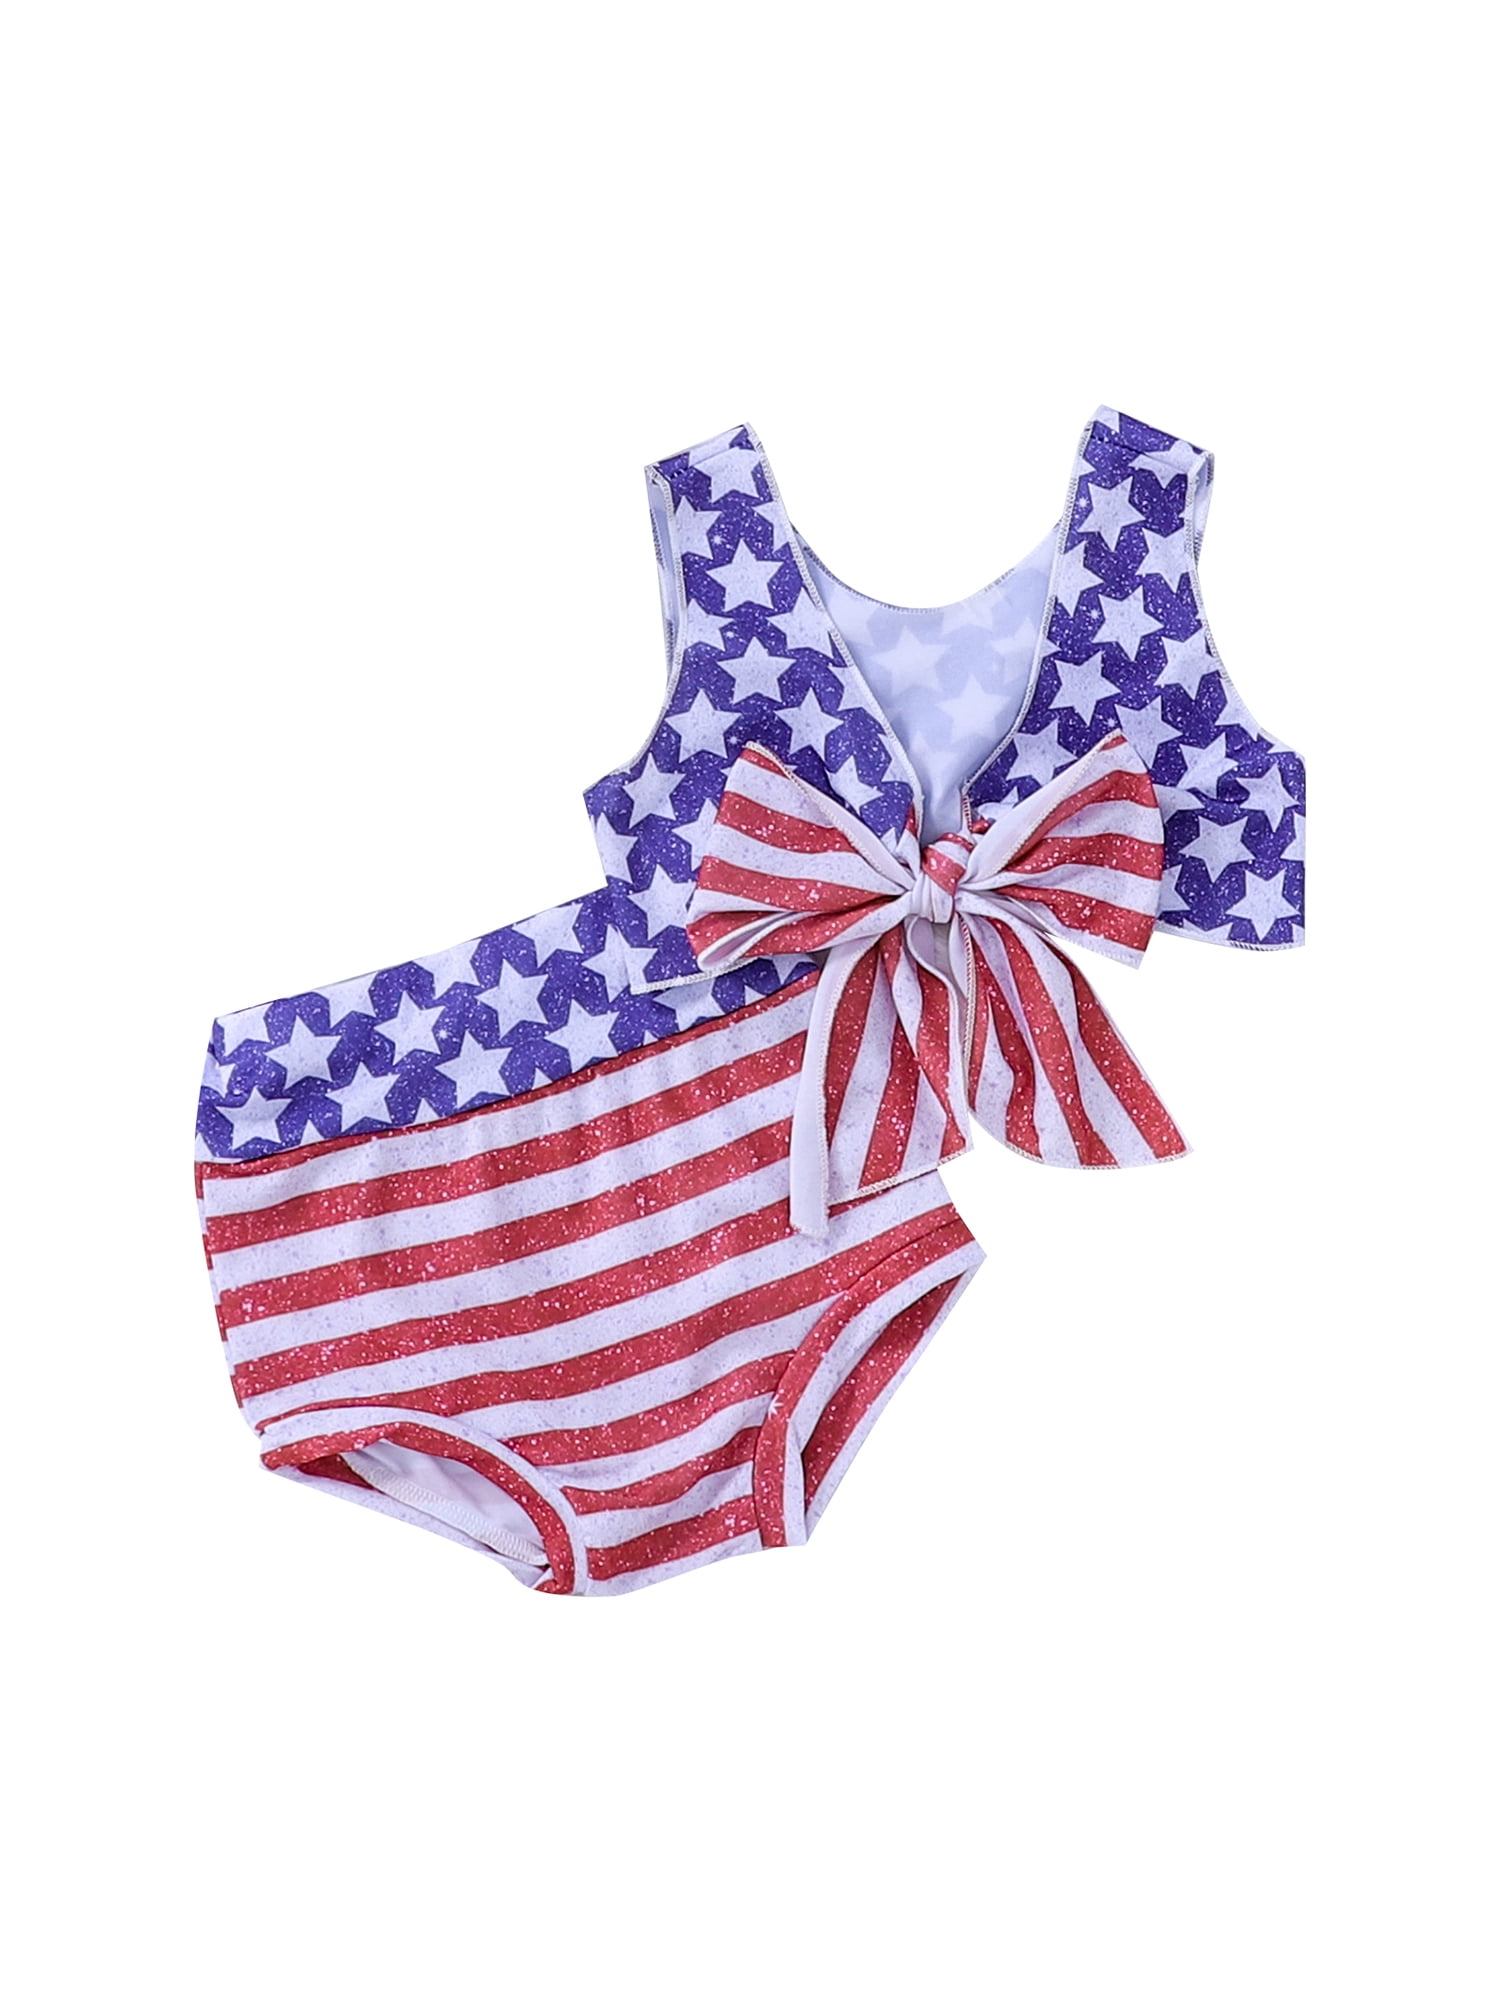 Kids Baby Girls Halter Bathing Suit USA Flag Striped Star Print Beach Bikini Swimsuit Headband 2Pcs Sets 